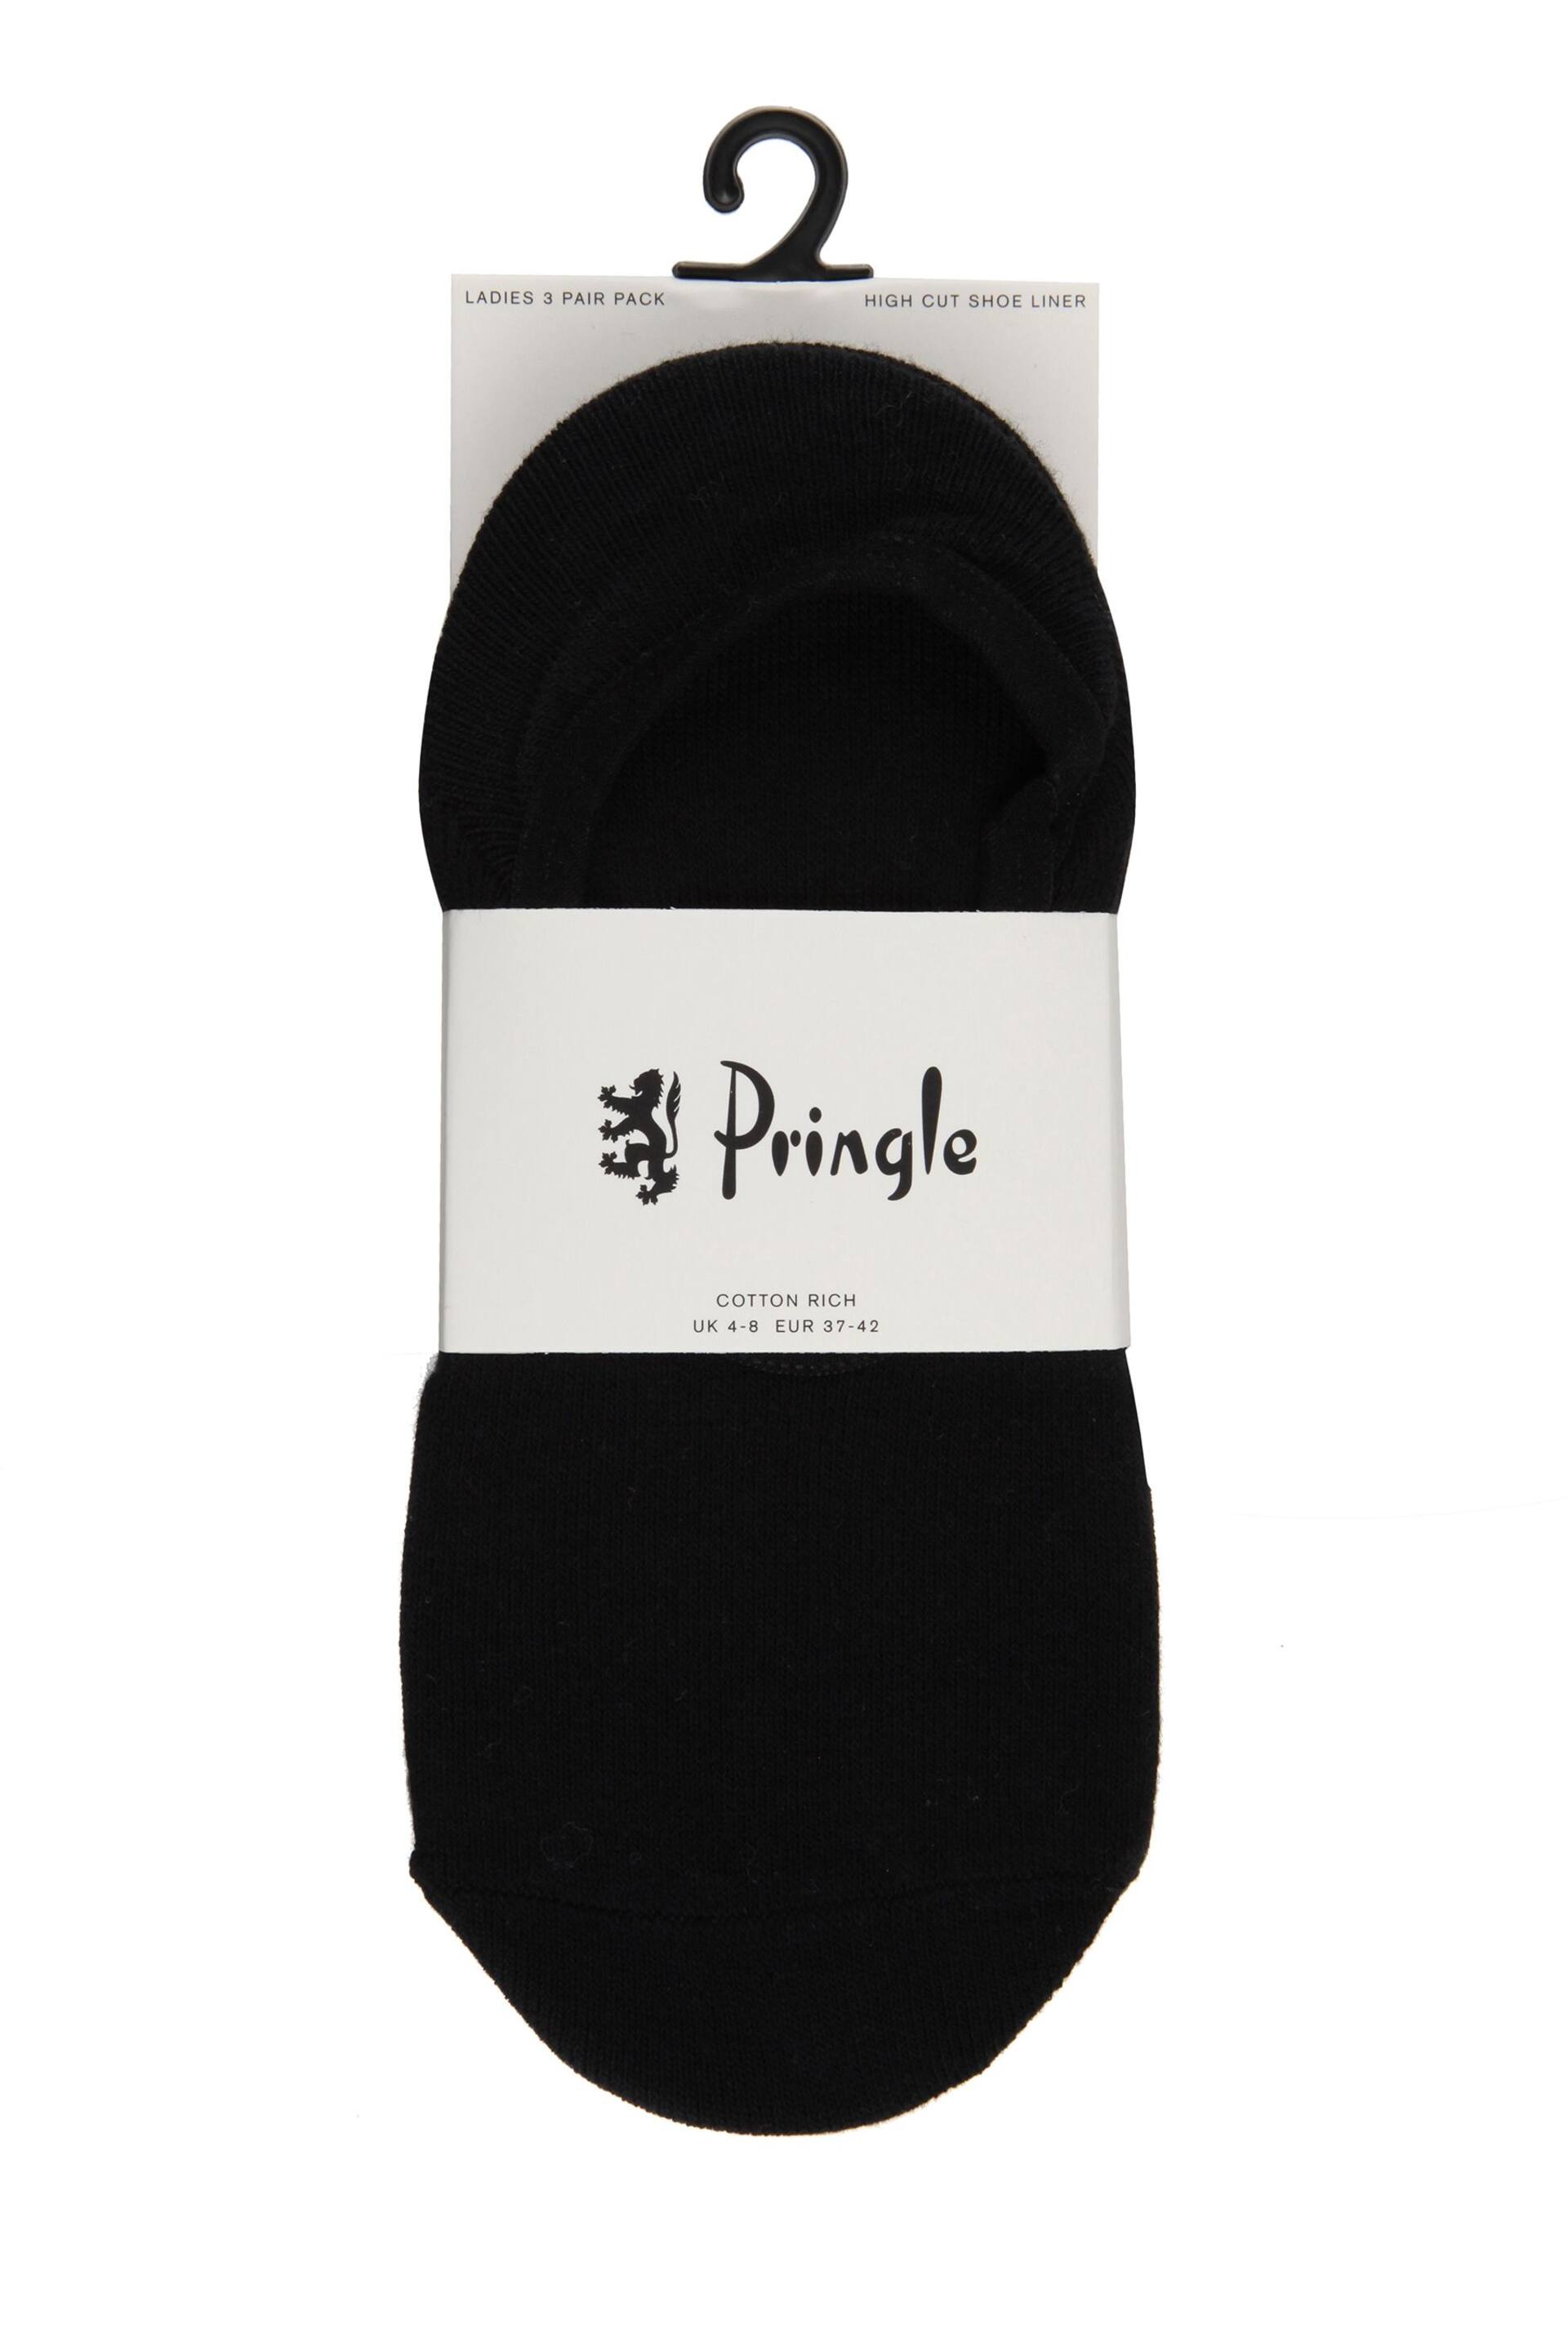 Pringle Black No Show Trainer Socks - Image 7 of 8